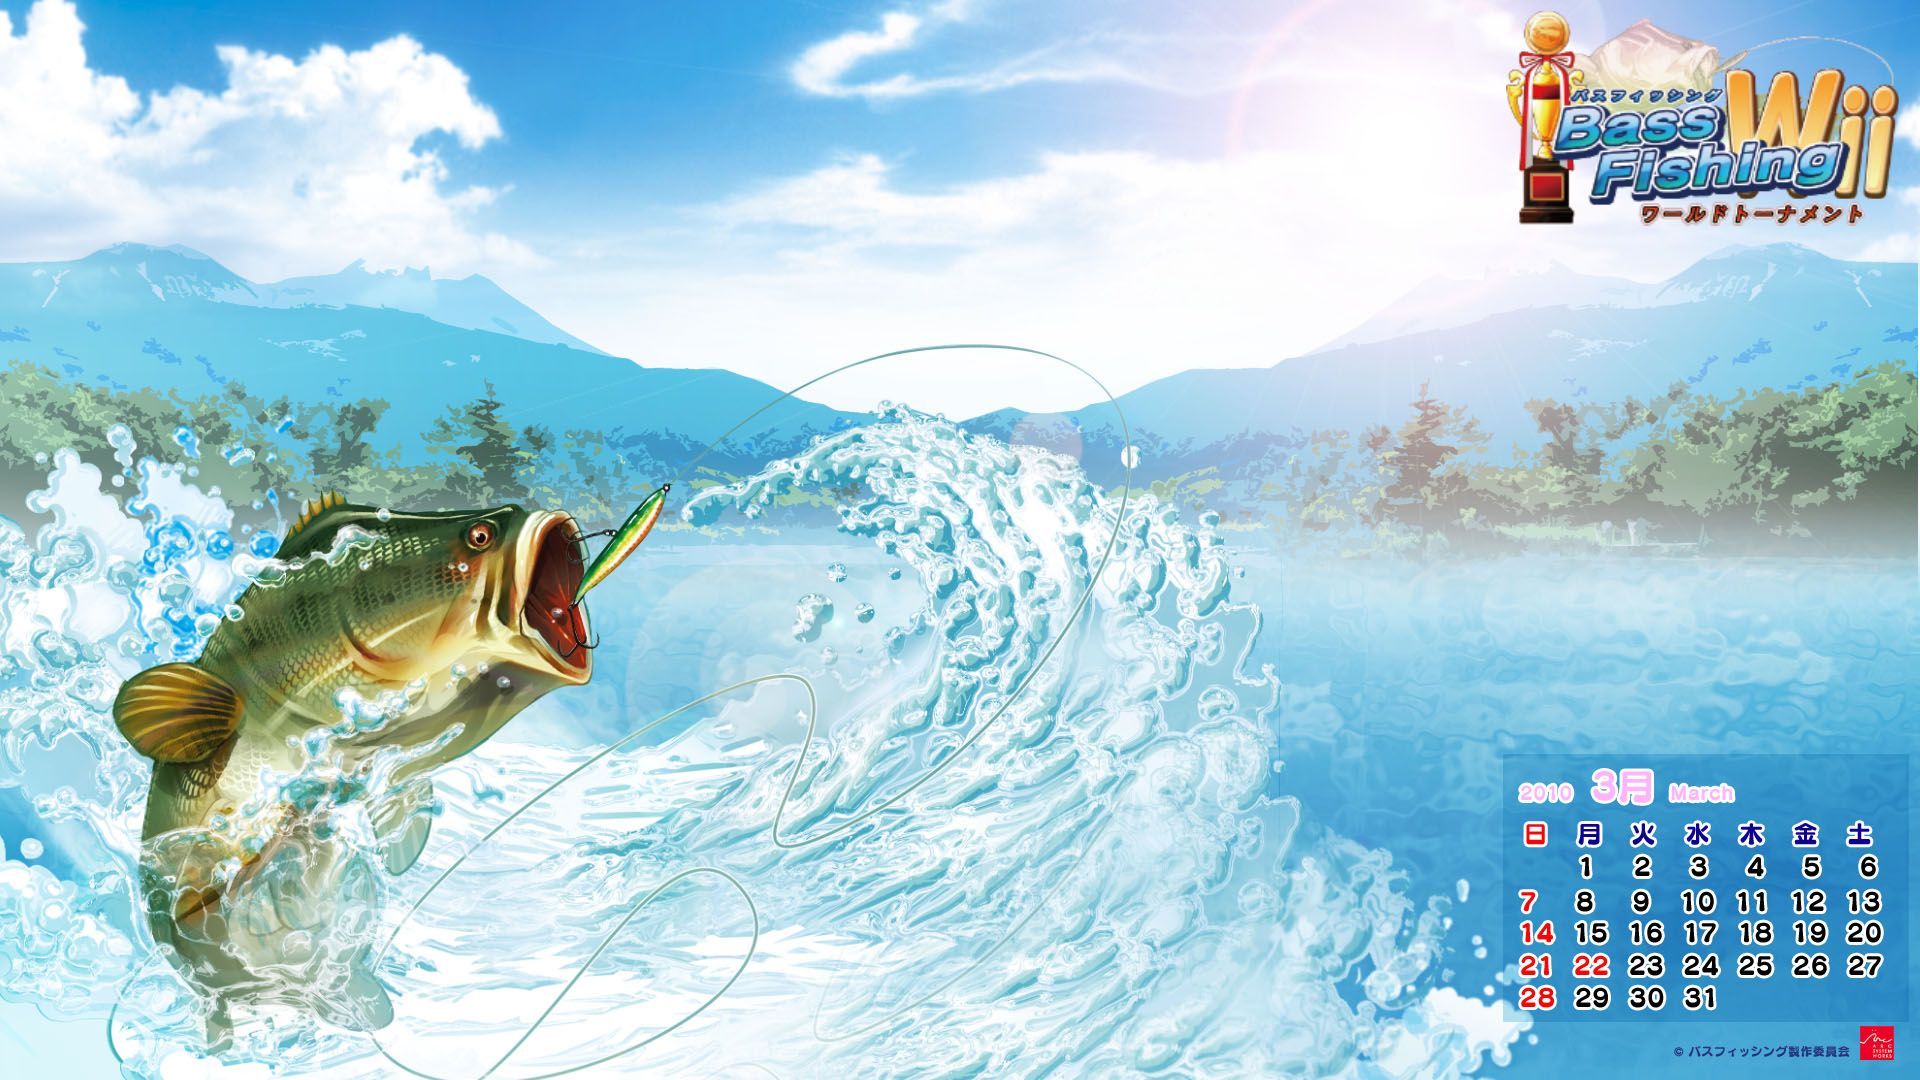 Wii Fishing Rod wallpaper 45633